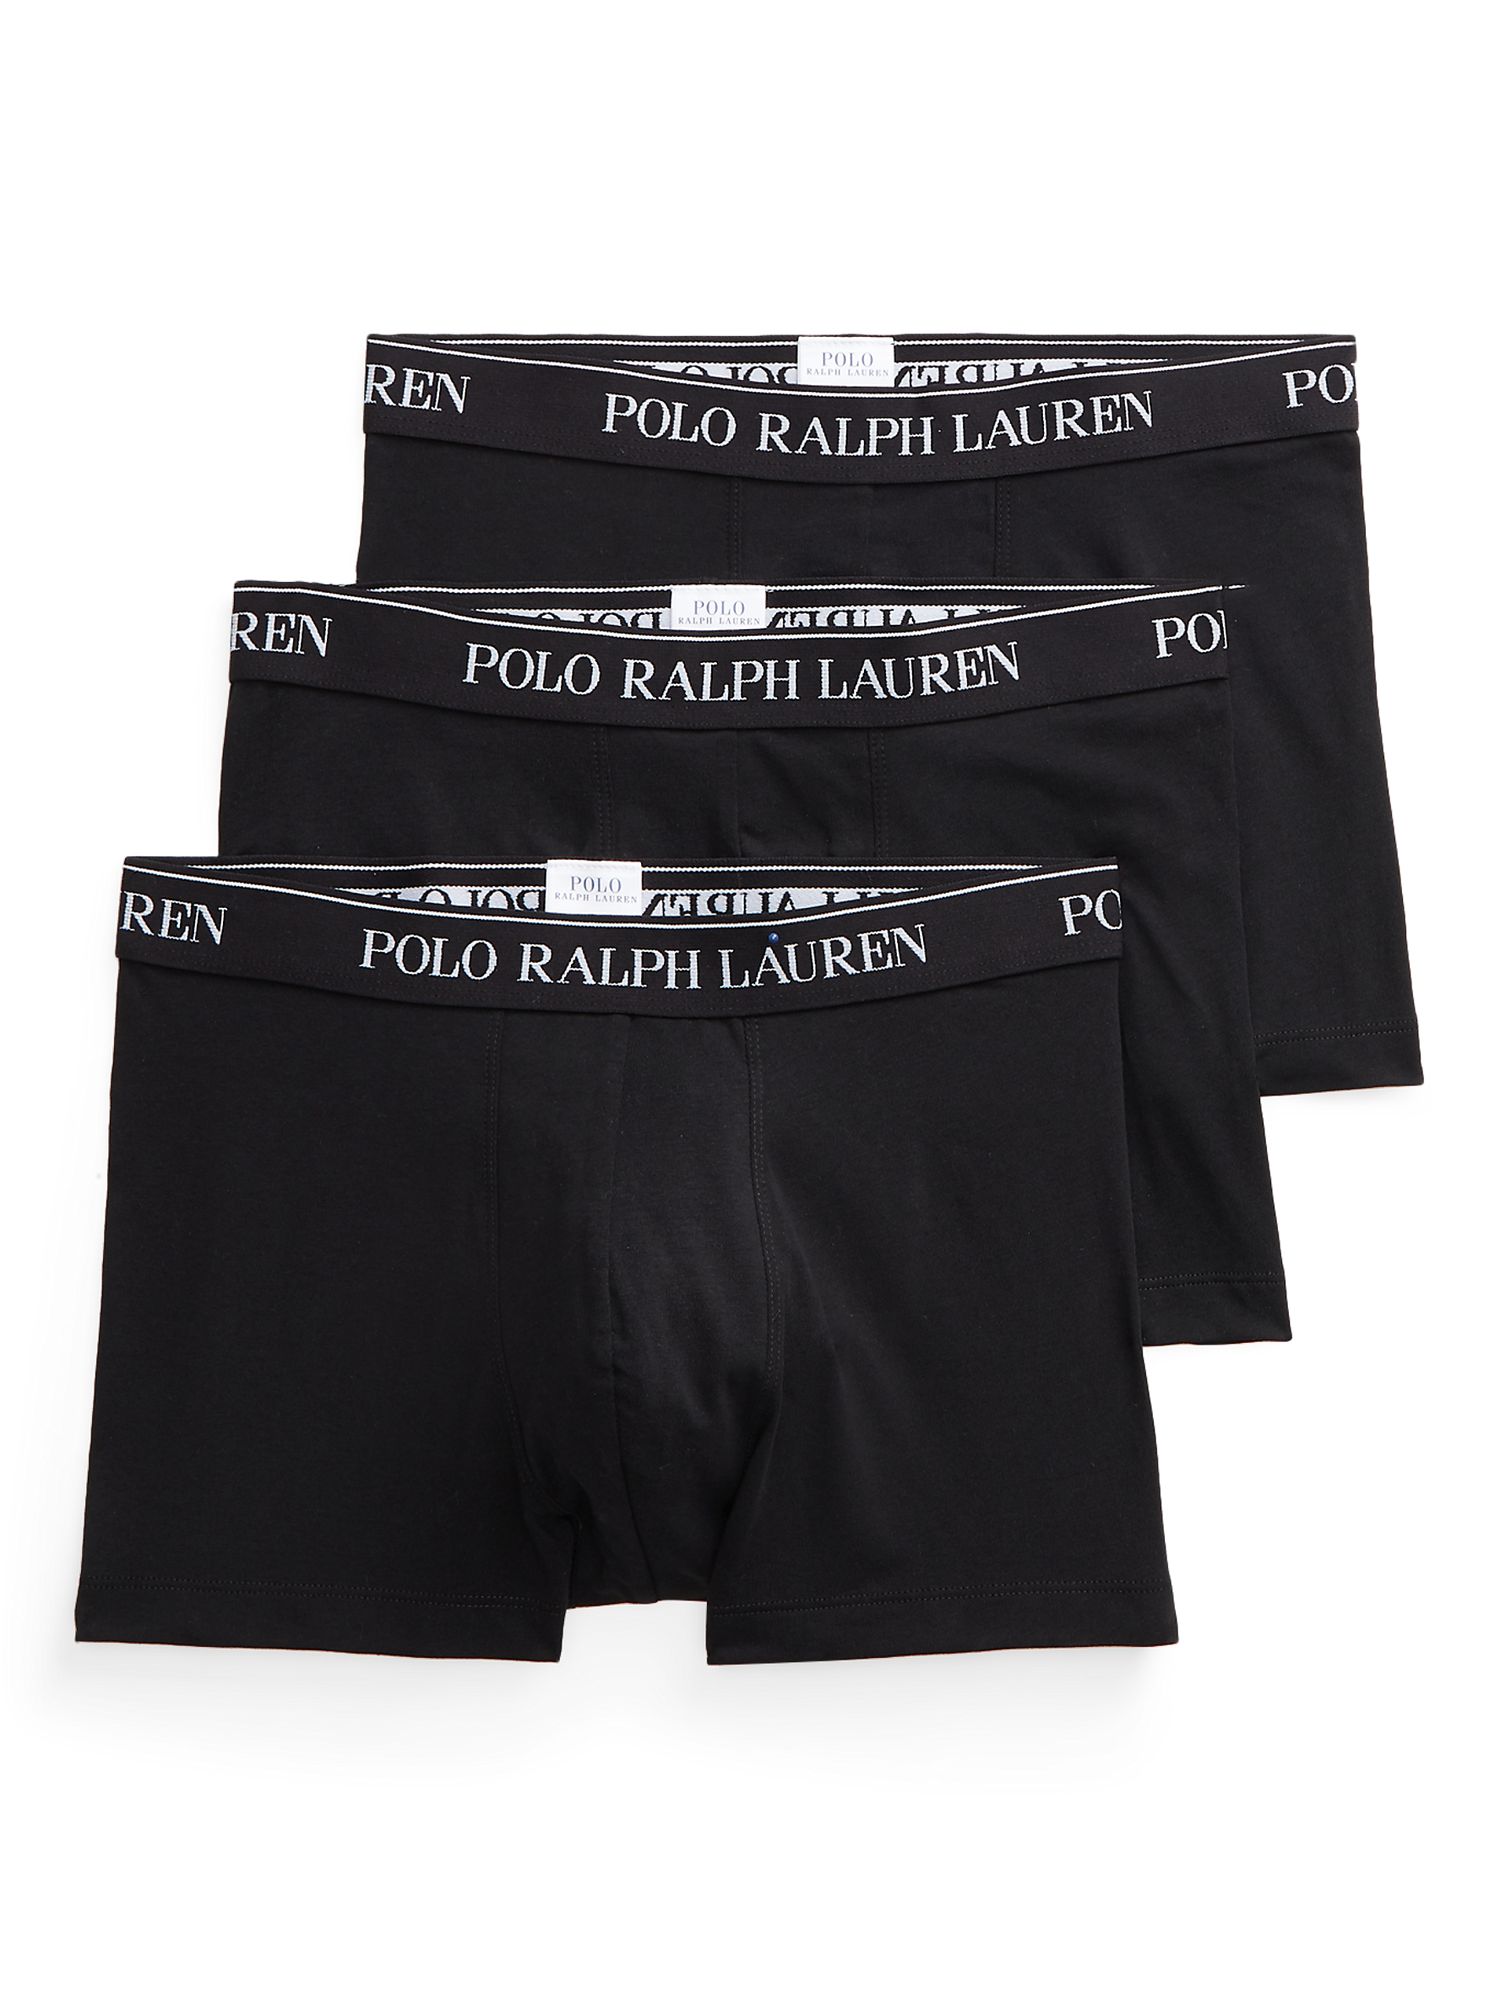 Polo Ralph Lauren Cotton Trunks, Pack of 3, Black, S